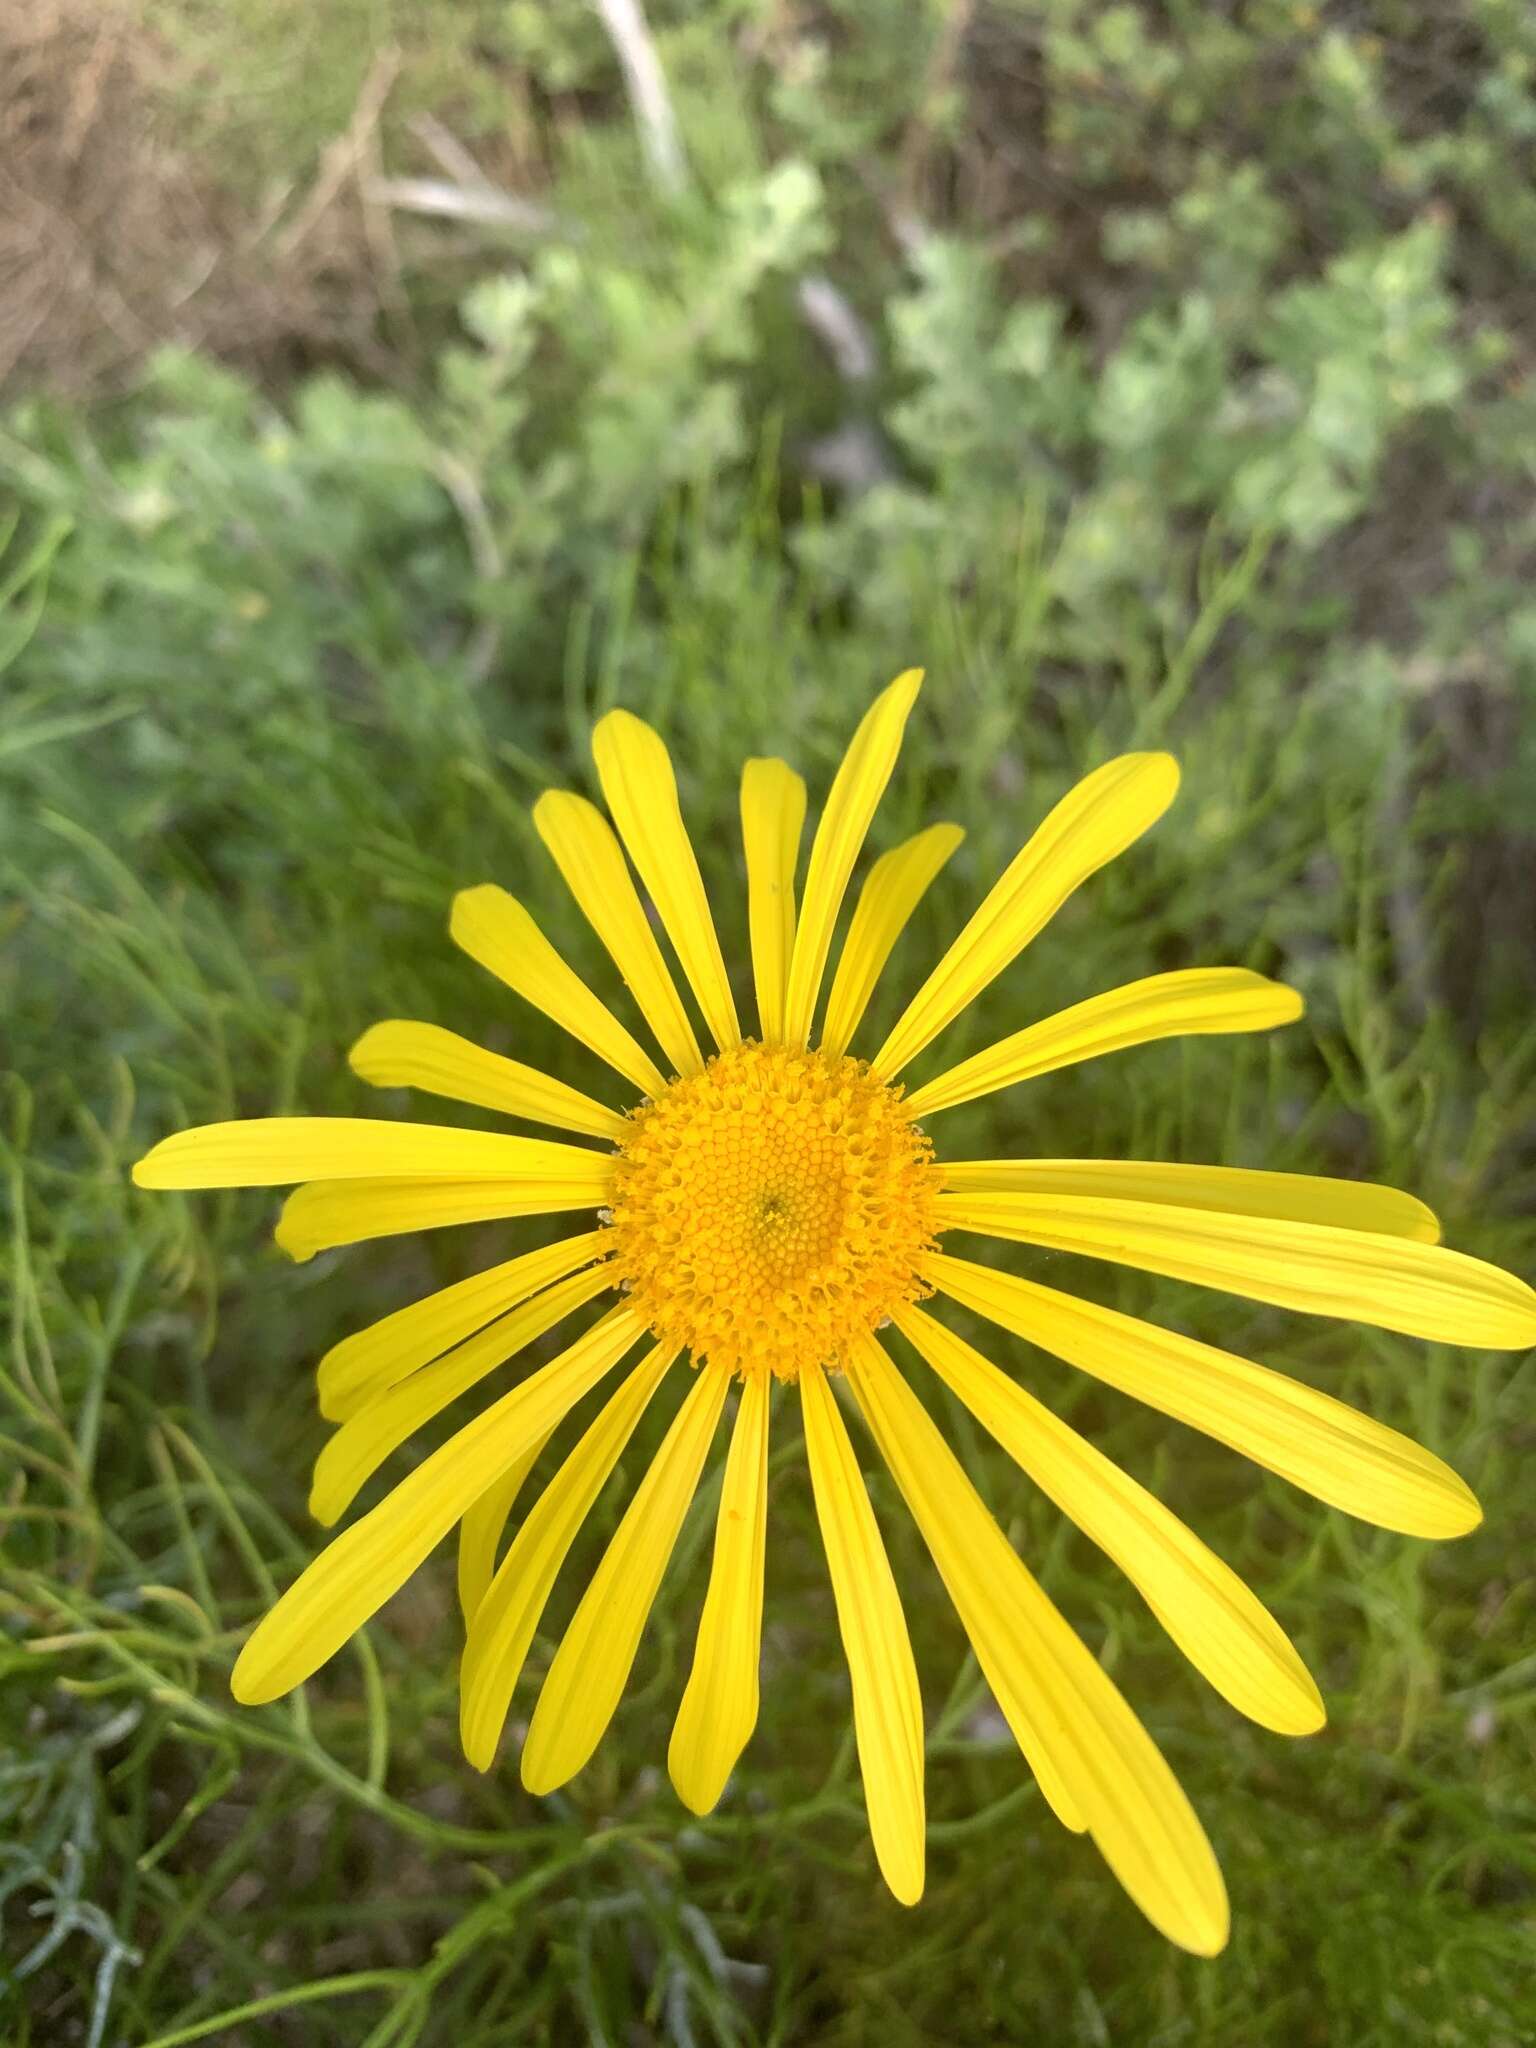 Image of Clanwilliam daisy